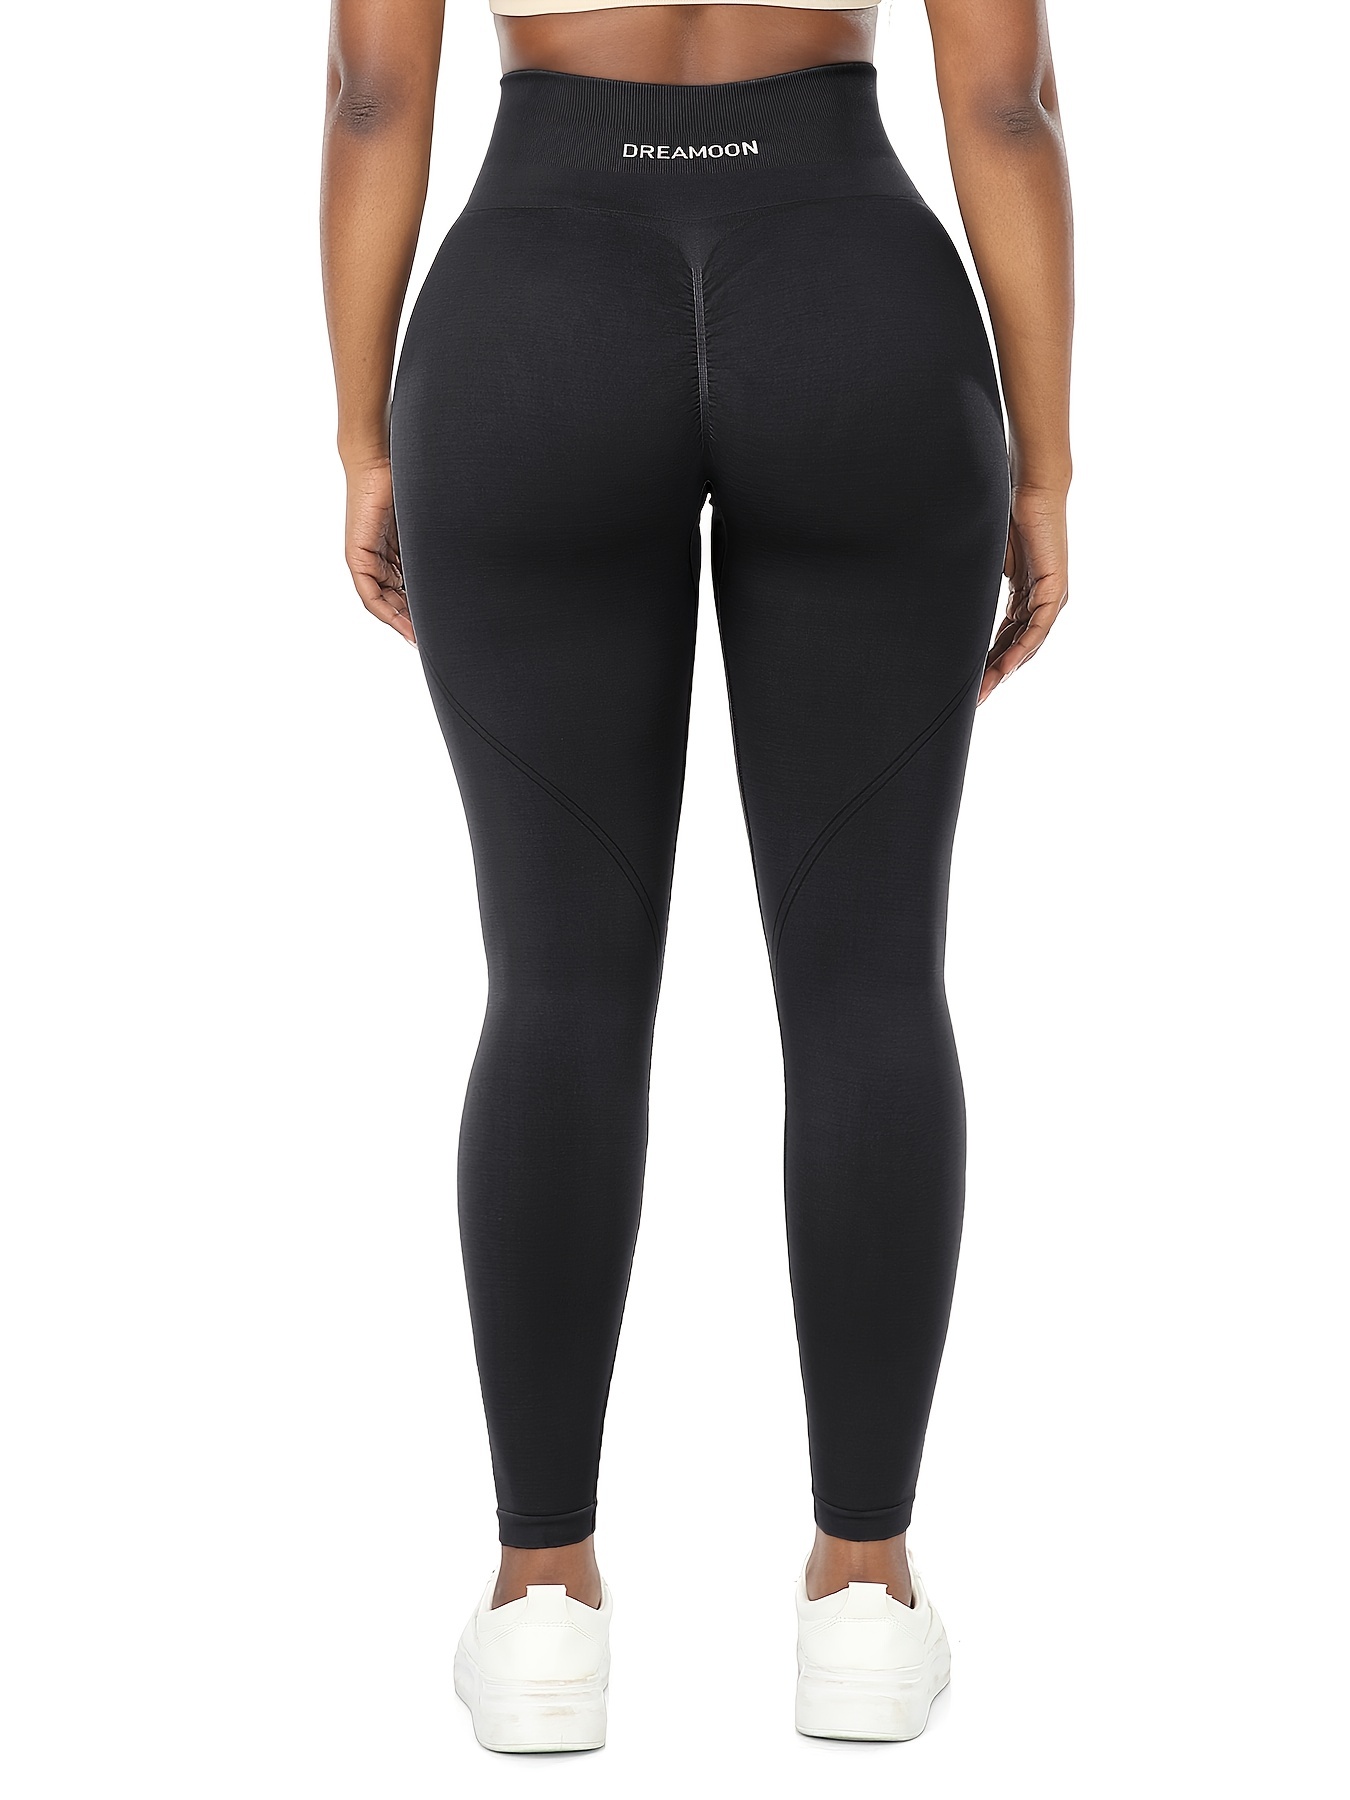 Buy GILLYA Workout Leggings for Women Butt Lifting Leggings High Waisted Seamless  Scrunch Gym Yoga Pants, 2# Upgrade Seamless-black, Medium at